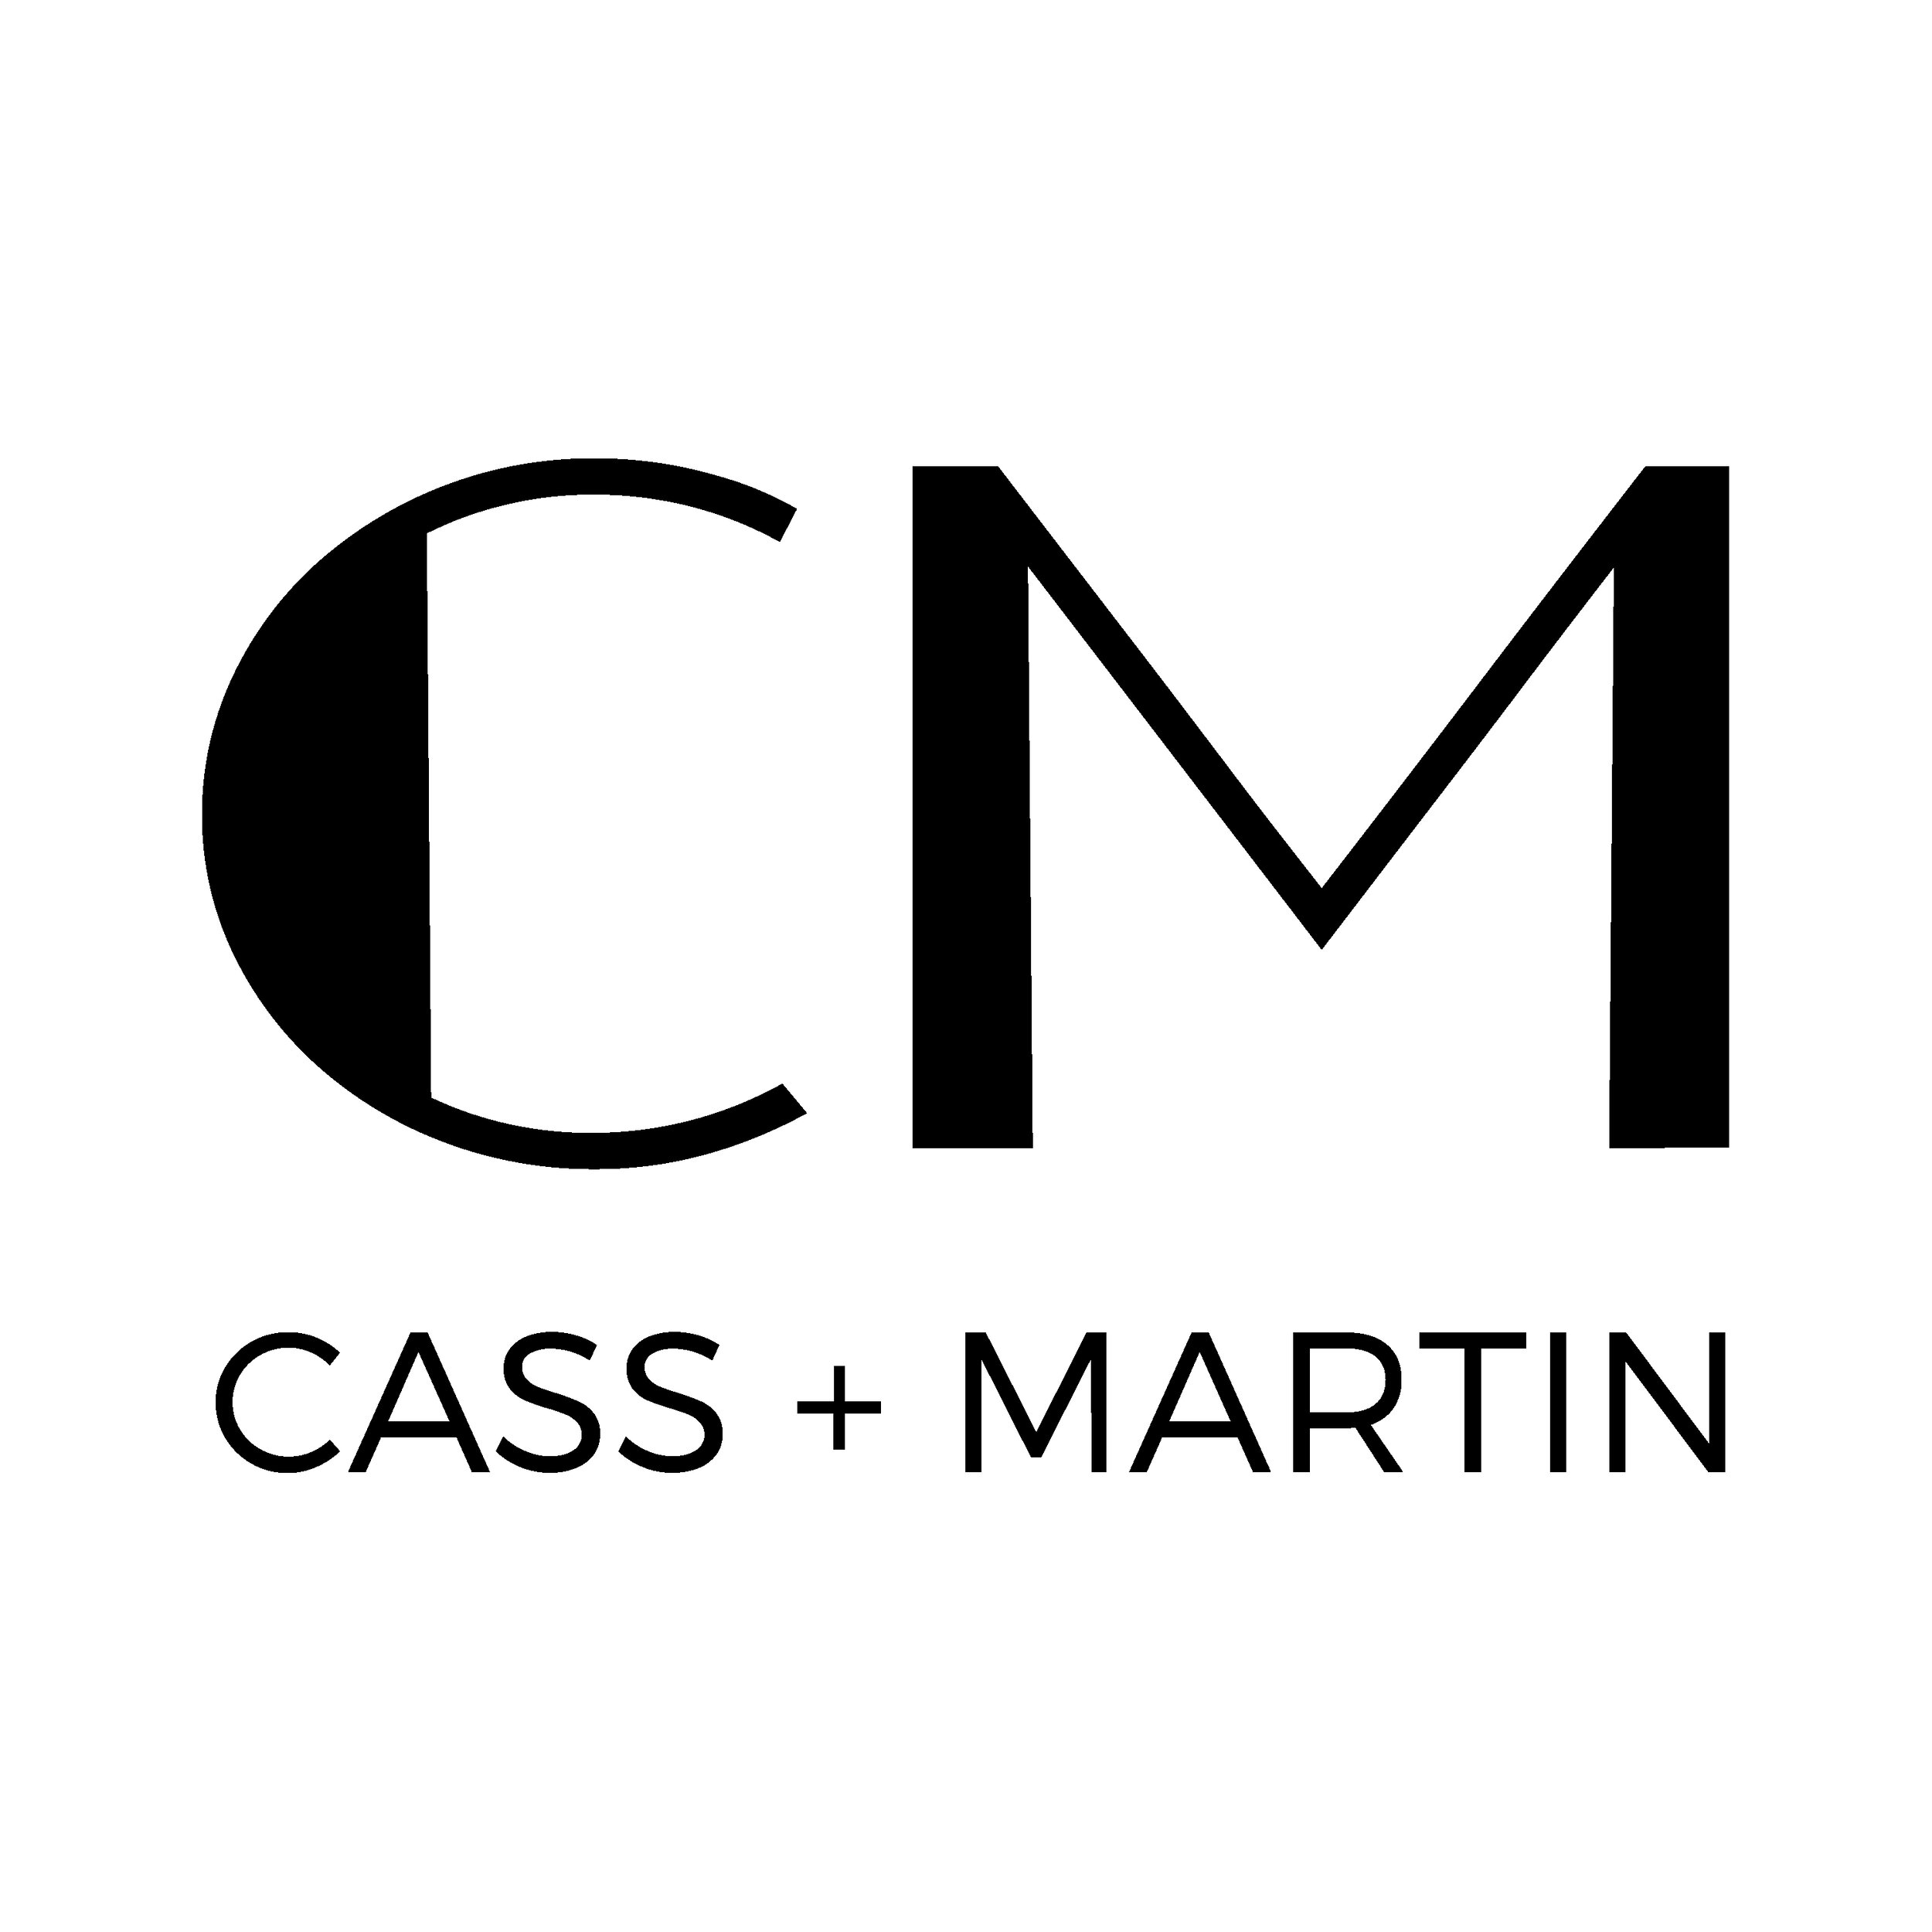 cass-martin-logo-black-lg.jpg